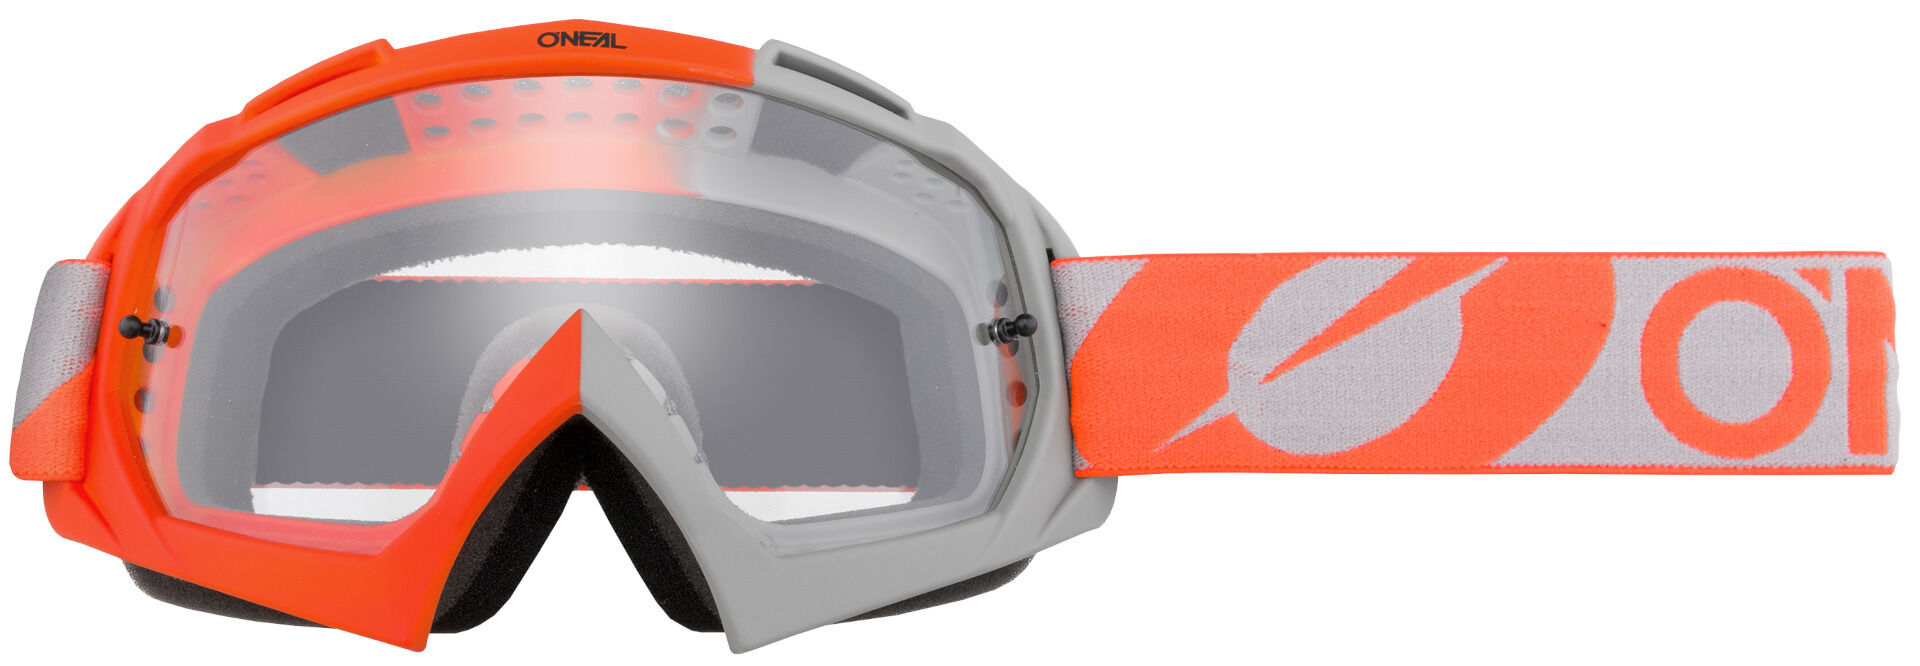 Oneal B-10 Twoface Motocross Brille Einheitsgröße Grau Orange